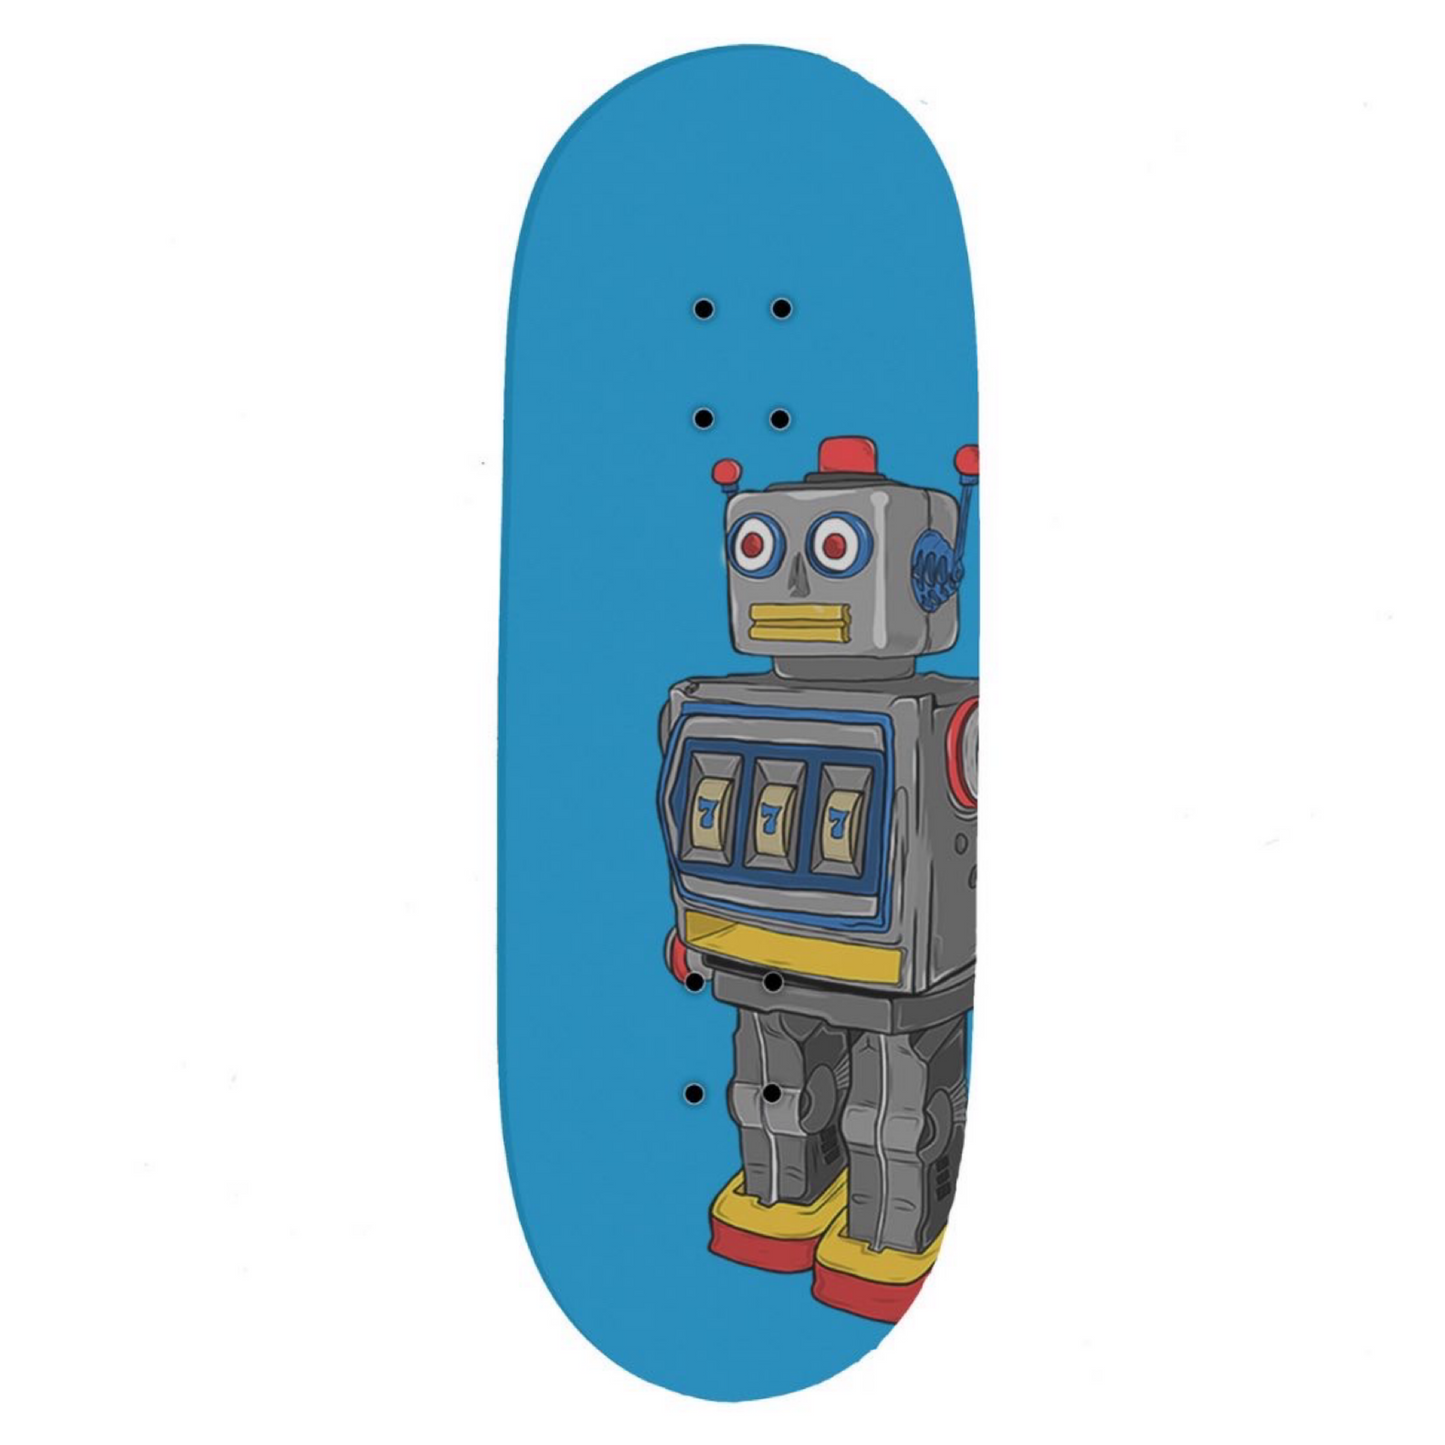 RedWolf “Blue Robo” Fingerboard Deck